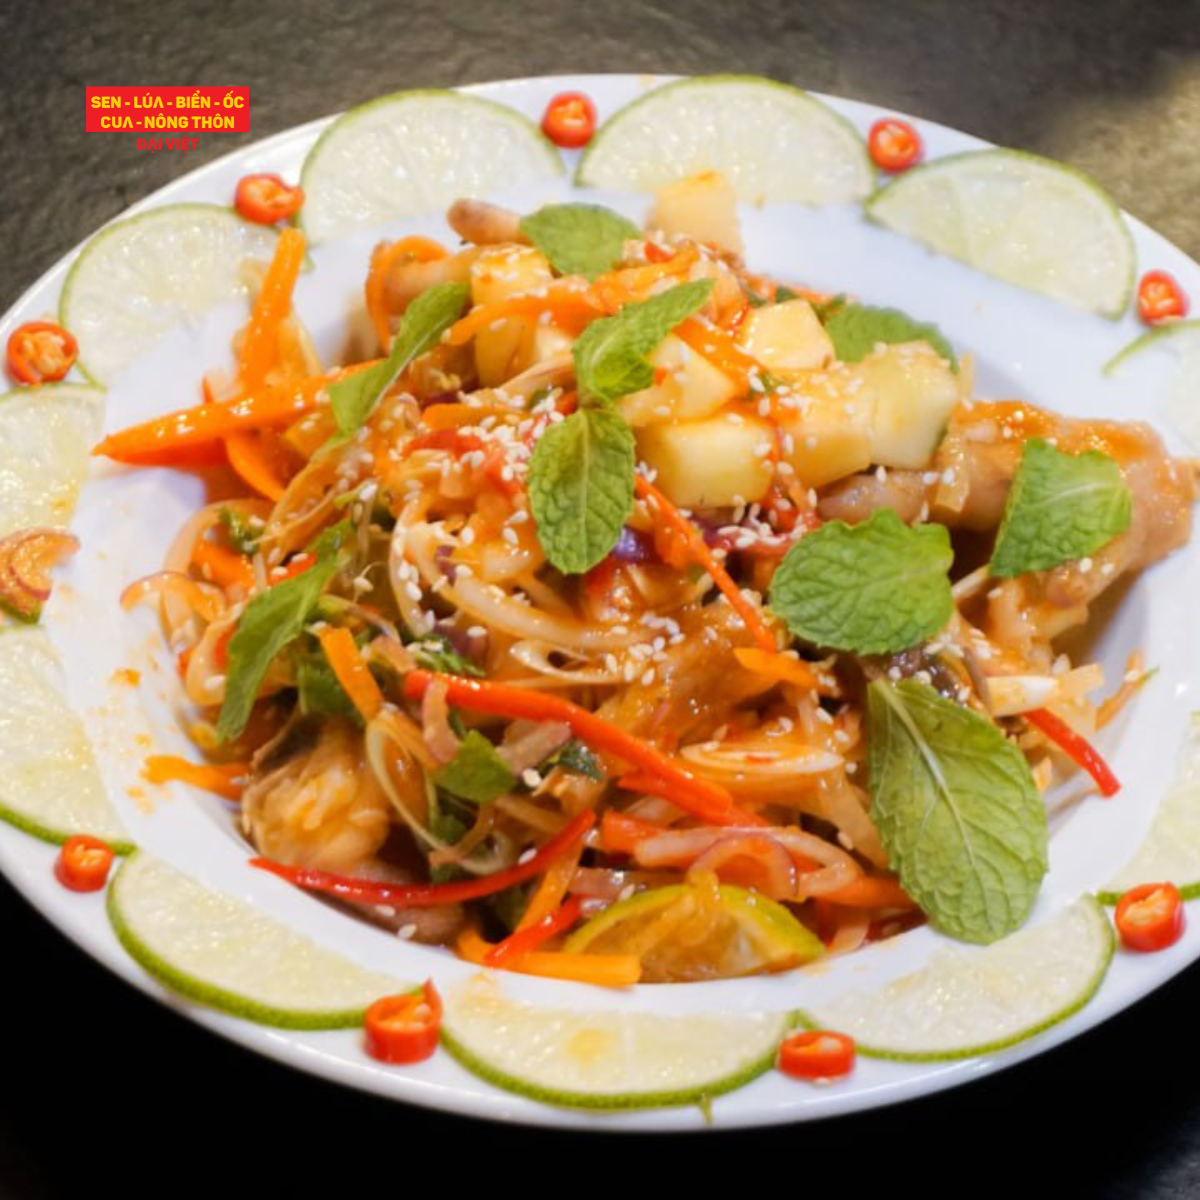  Steamed Chicken Feet With Thai Sauce (2 Pairs) - Chân Gà Sốt Thái 